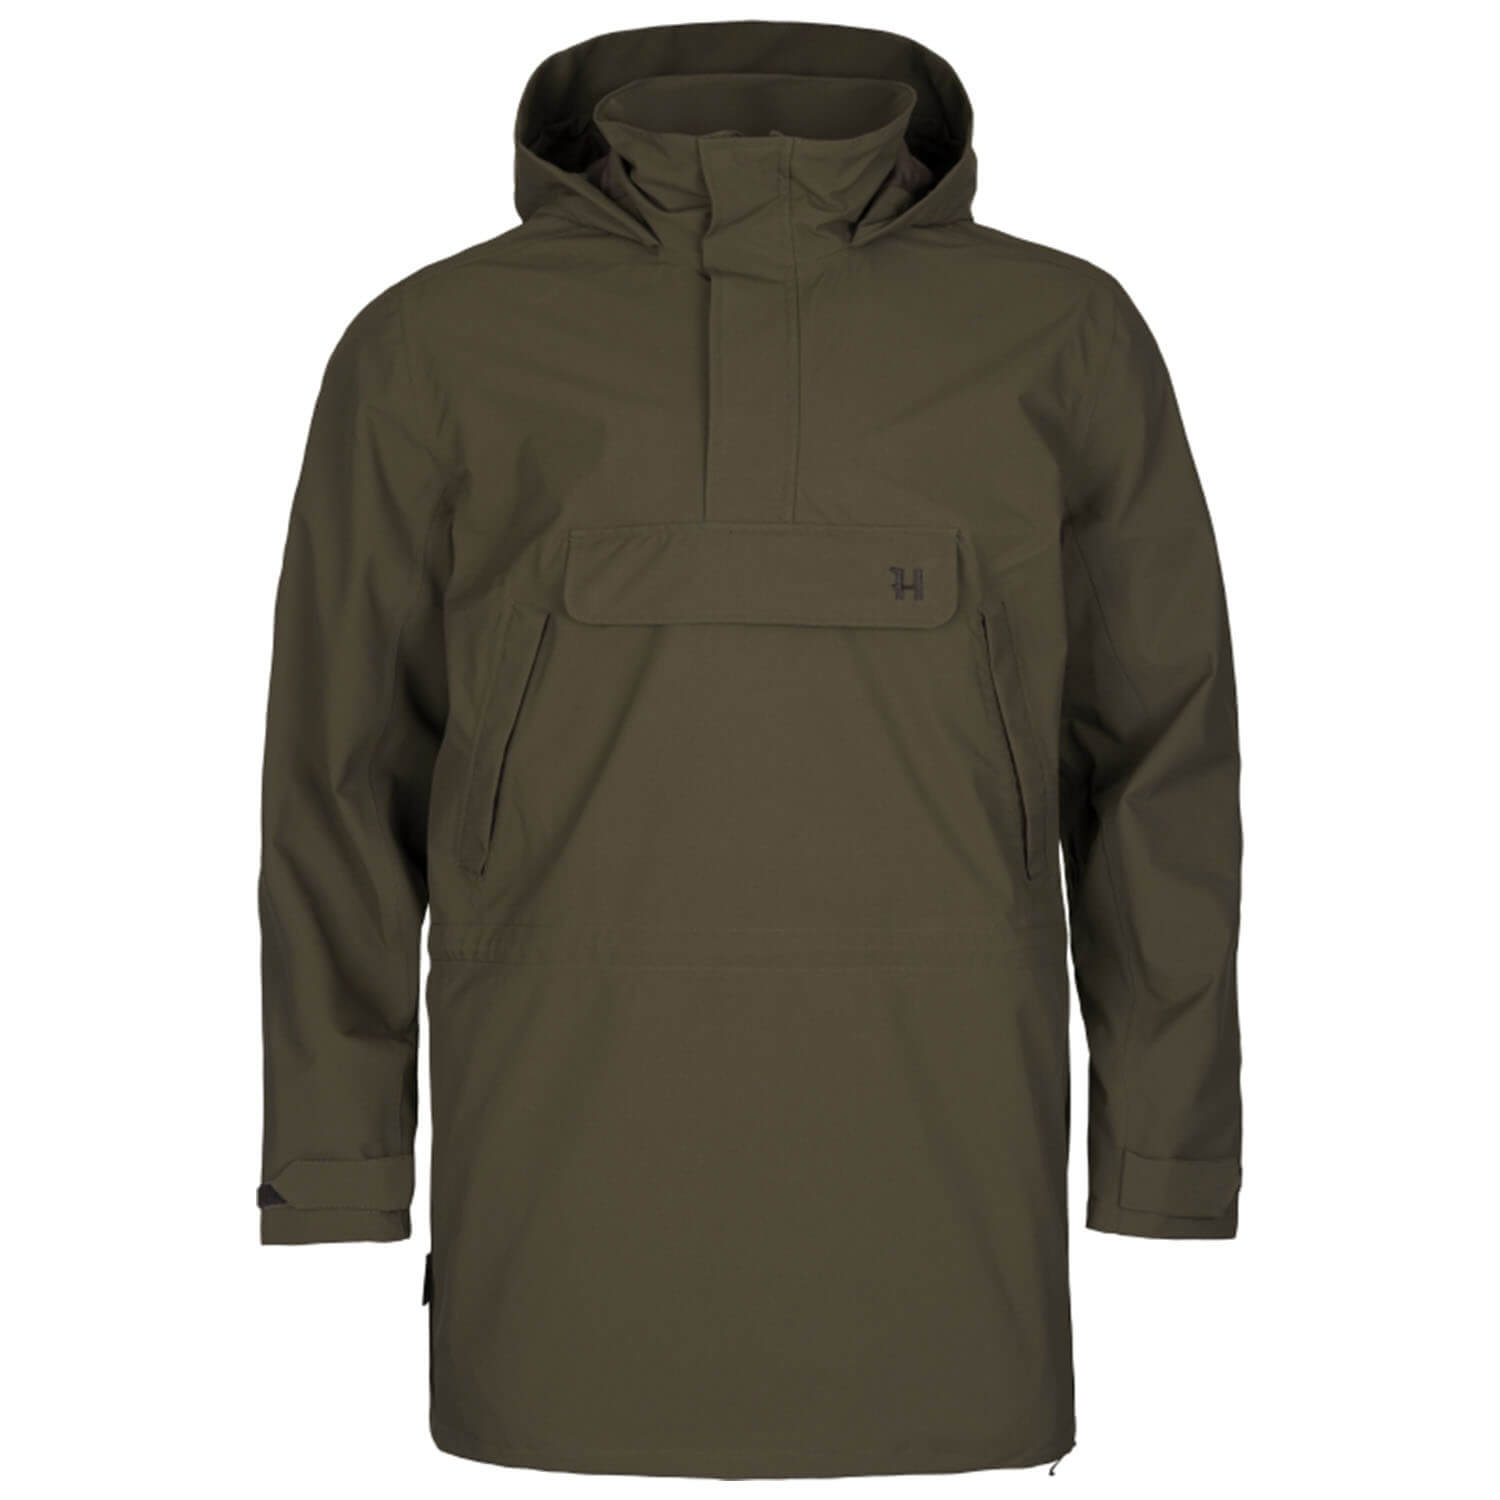 Härkila hunting jacket orton tech hws (Willow Green) - Hunting Jackets